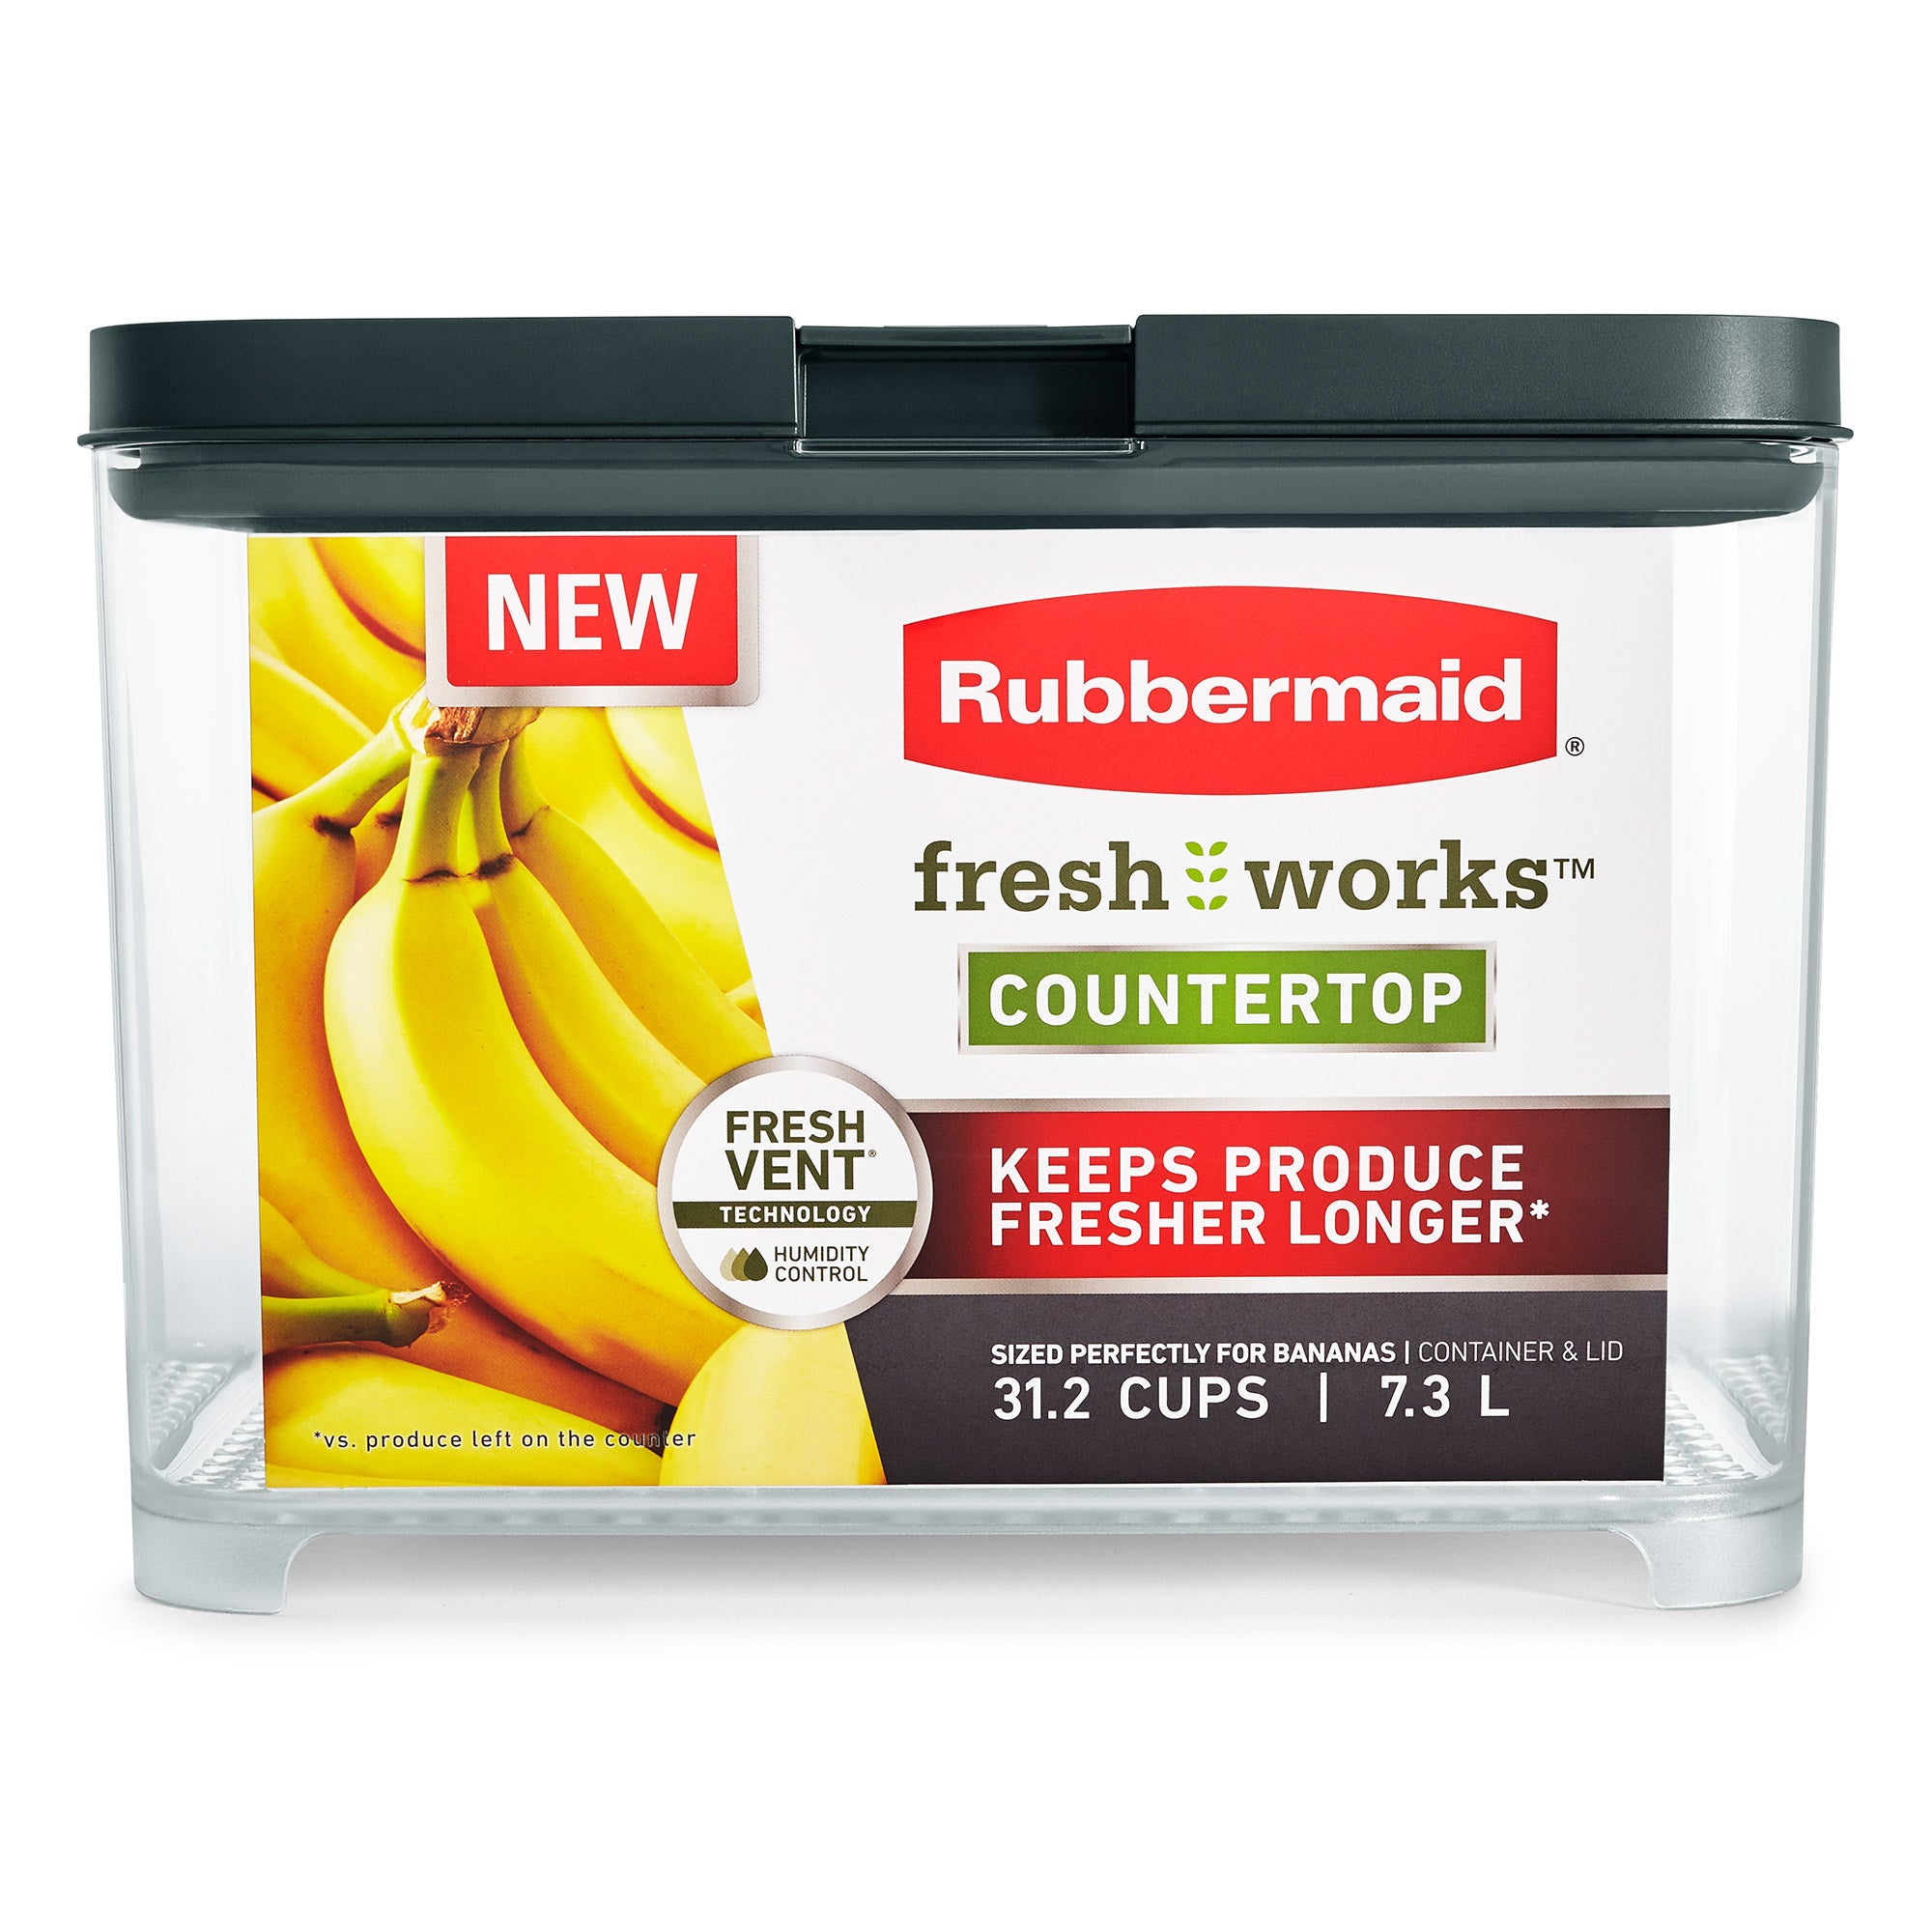 Rubbermaid FreshWorks Countertop Banana Countertop Food Storage Container, 7.3L